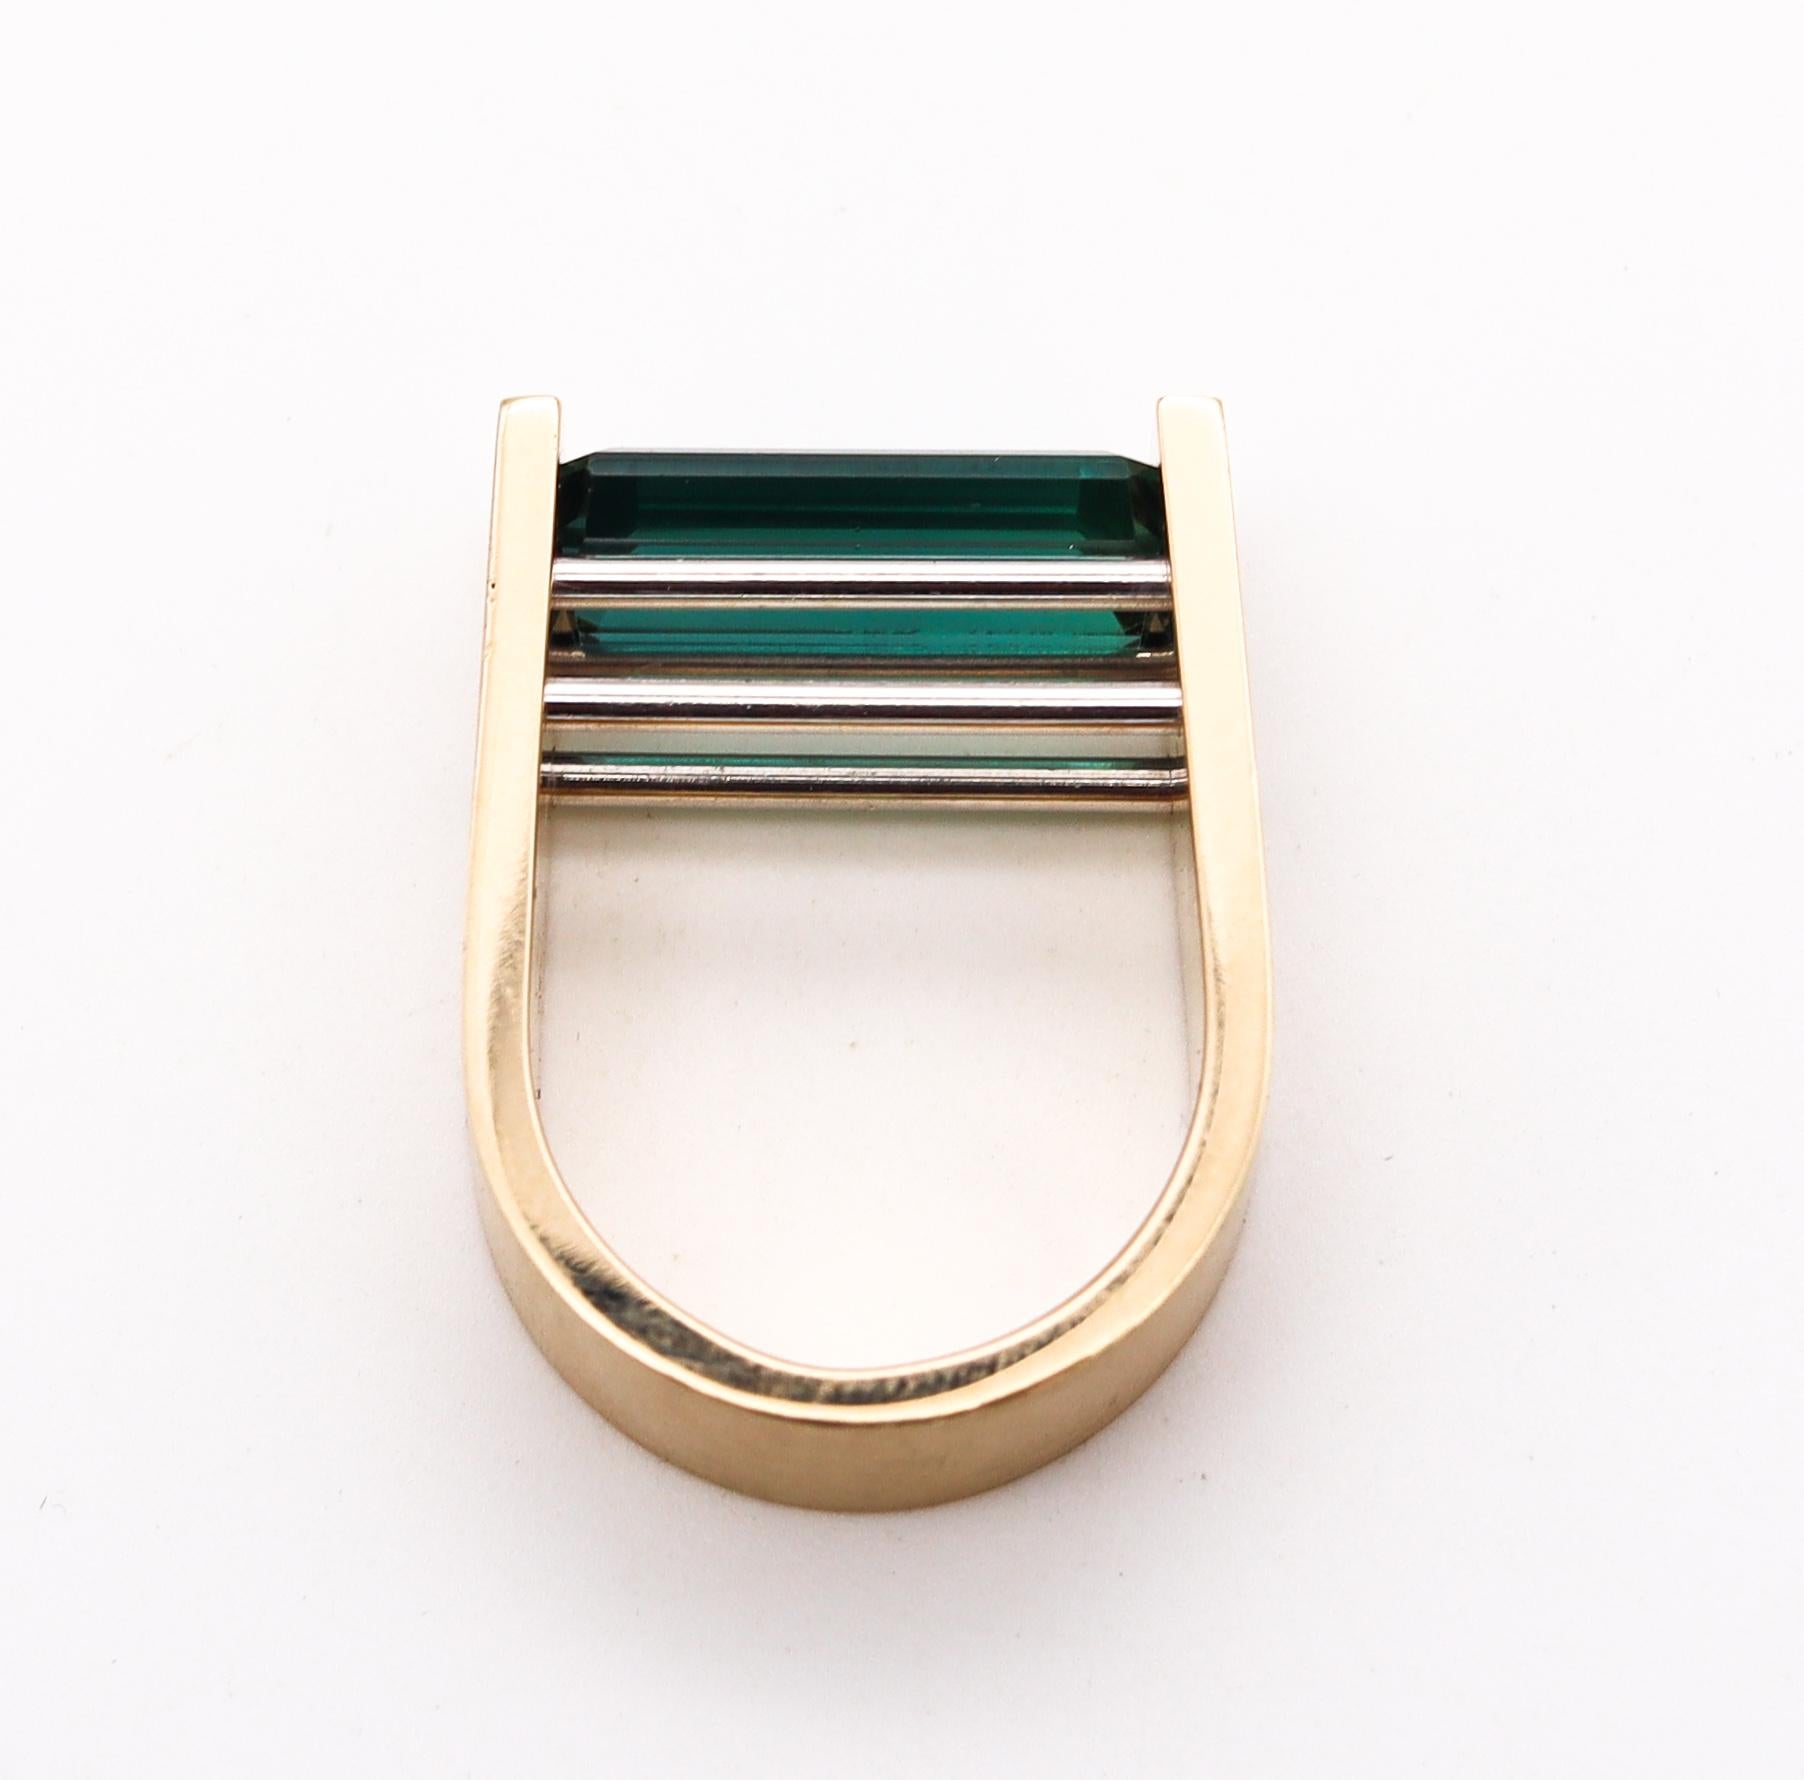 Modernist Geometric Bauhaus Ring 18Kt Gold Platinum 6.87 Cts Chrome Tourmaline 1